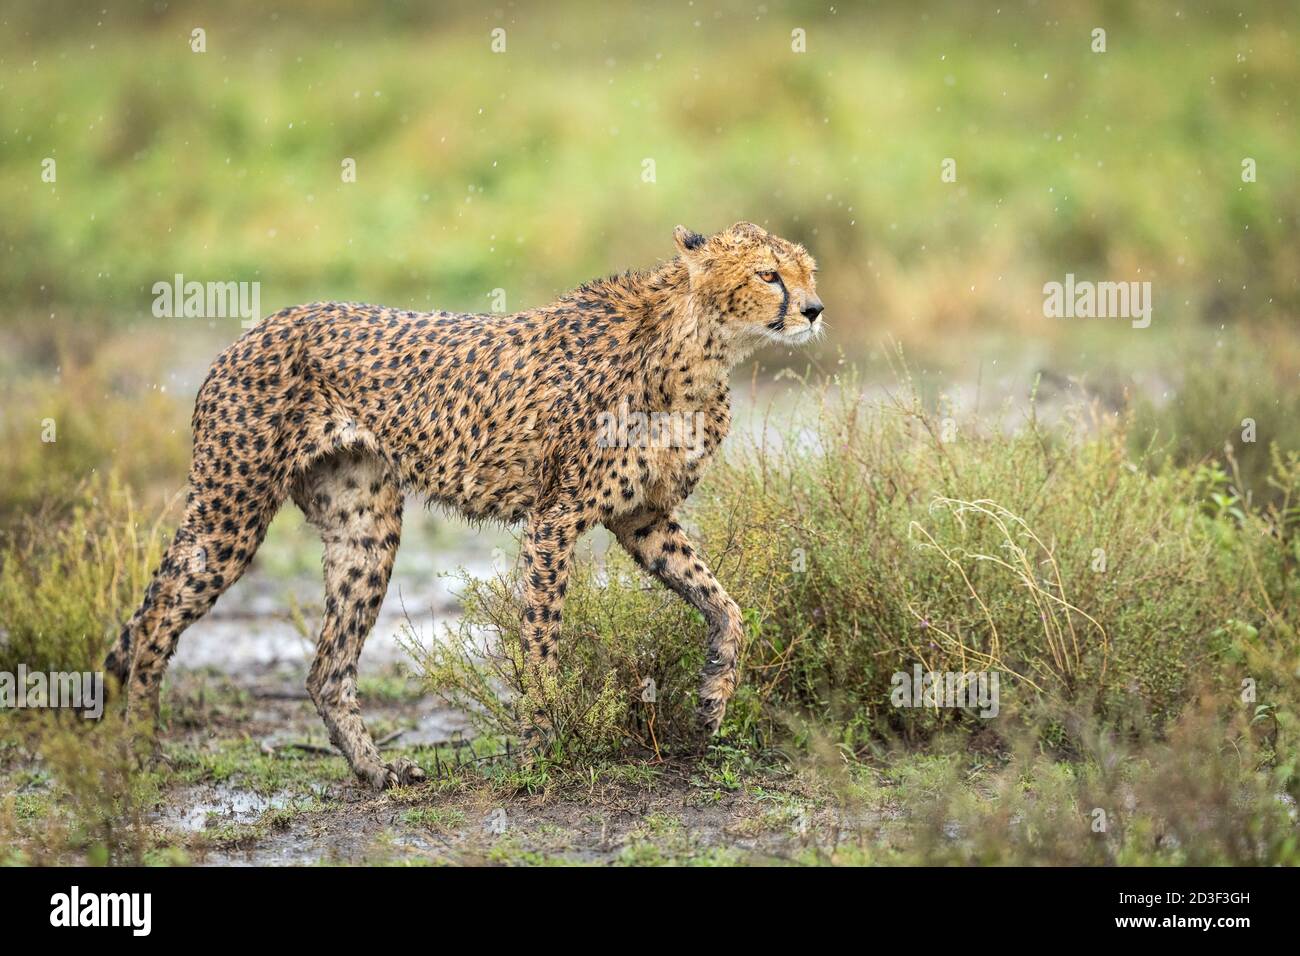 Adult cheetah walking in the rain looking alert in Ndutu in Tanzania Stock Photo